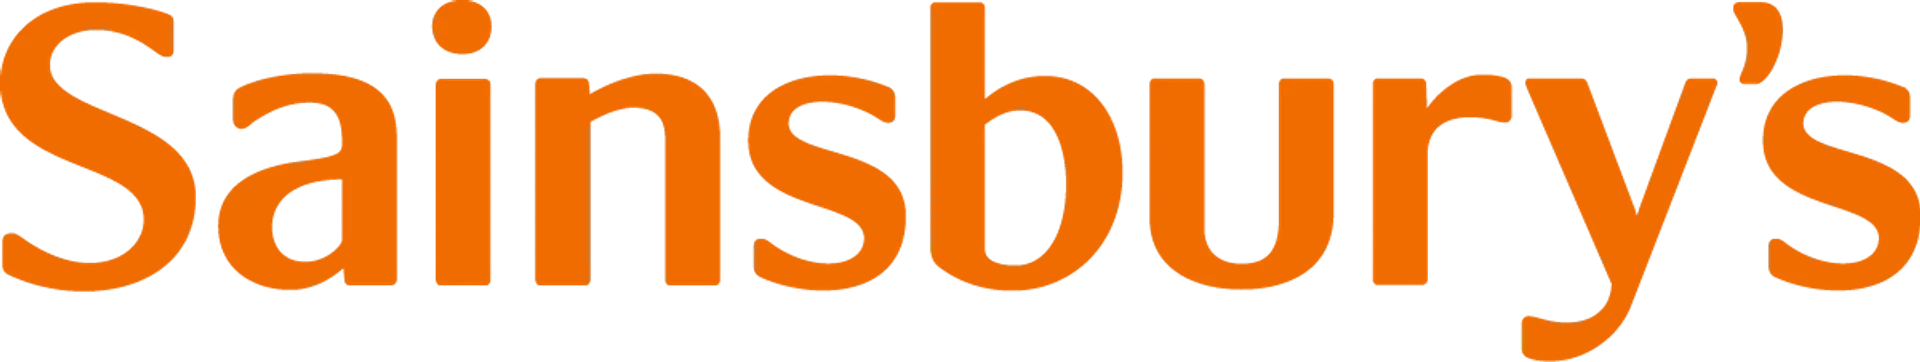 SAINSBURY'S logo